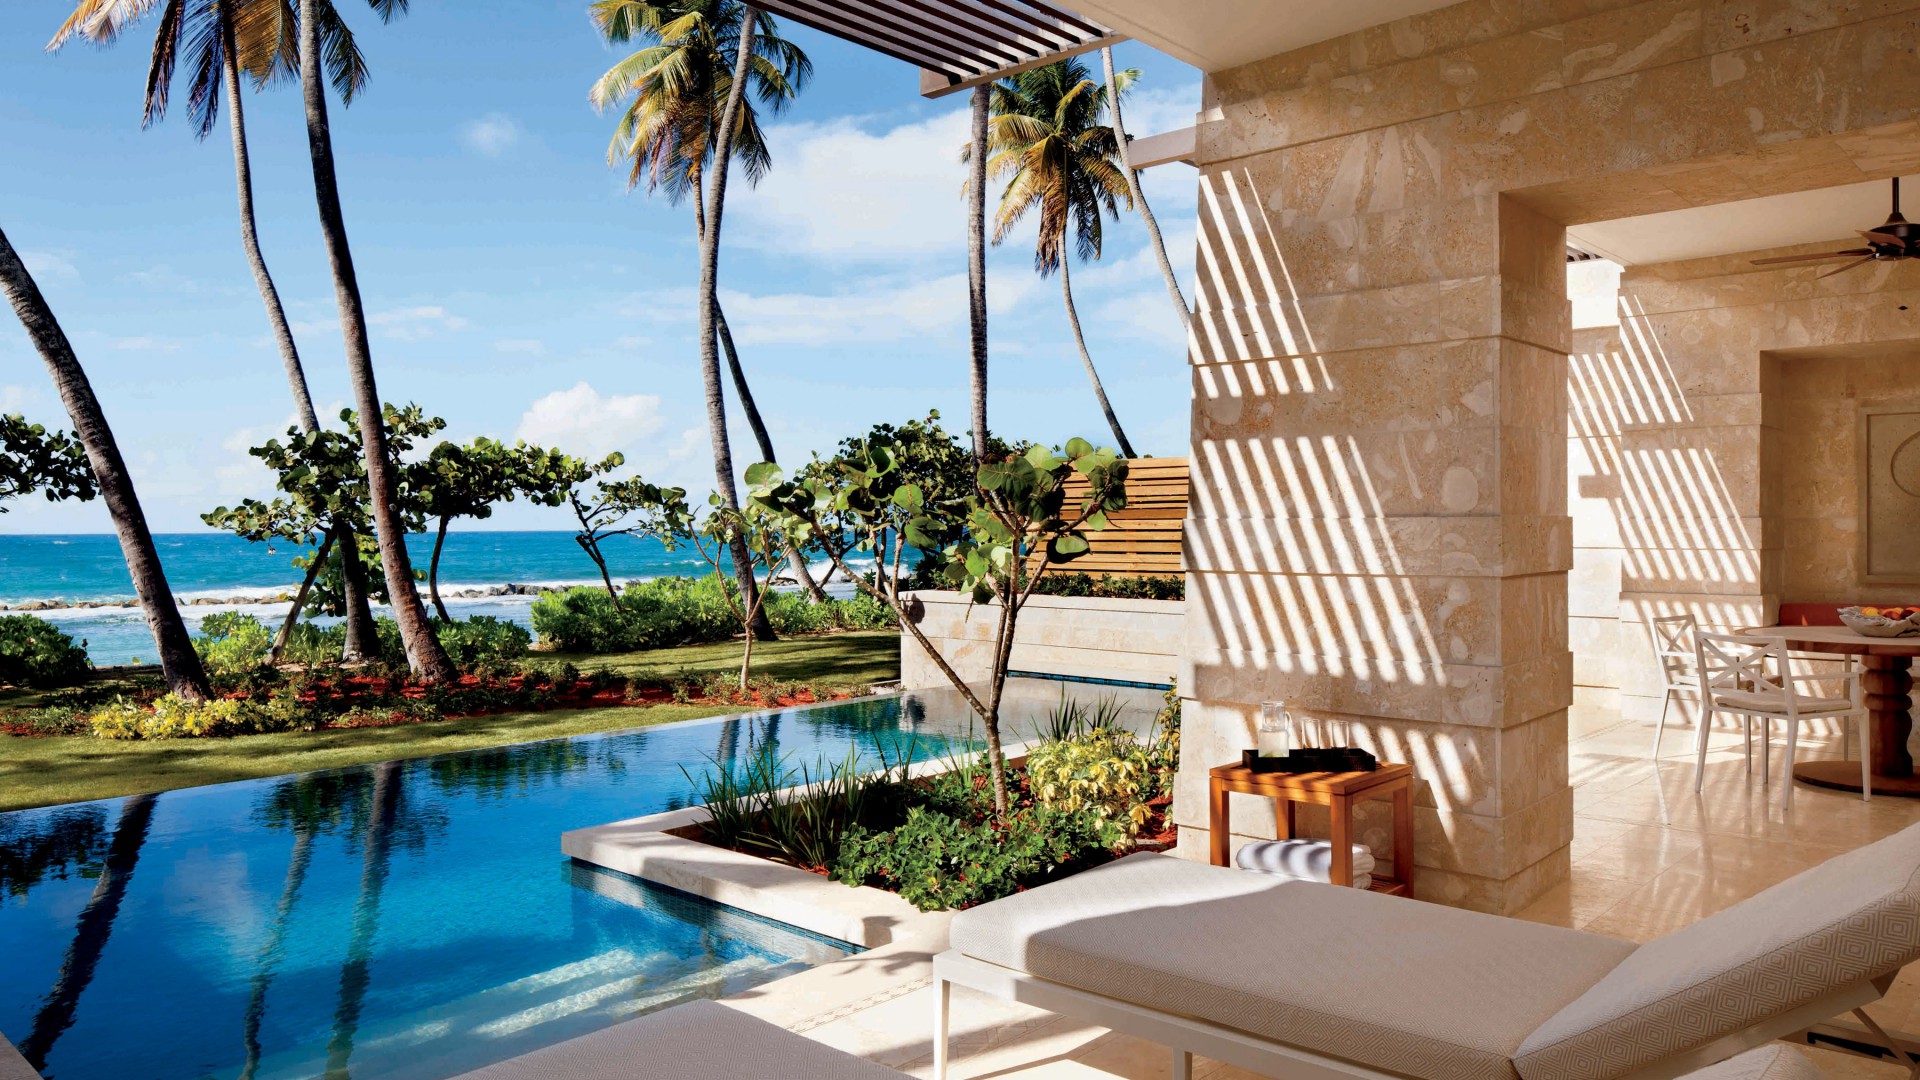 Ritz-Carlton Reserve, Dorado, Puerto Rico, The best hotel pools 2017, tourism, travel, resort, vacation, pool, palms, sunbed (horizontal)